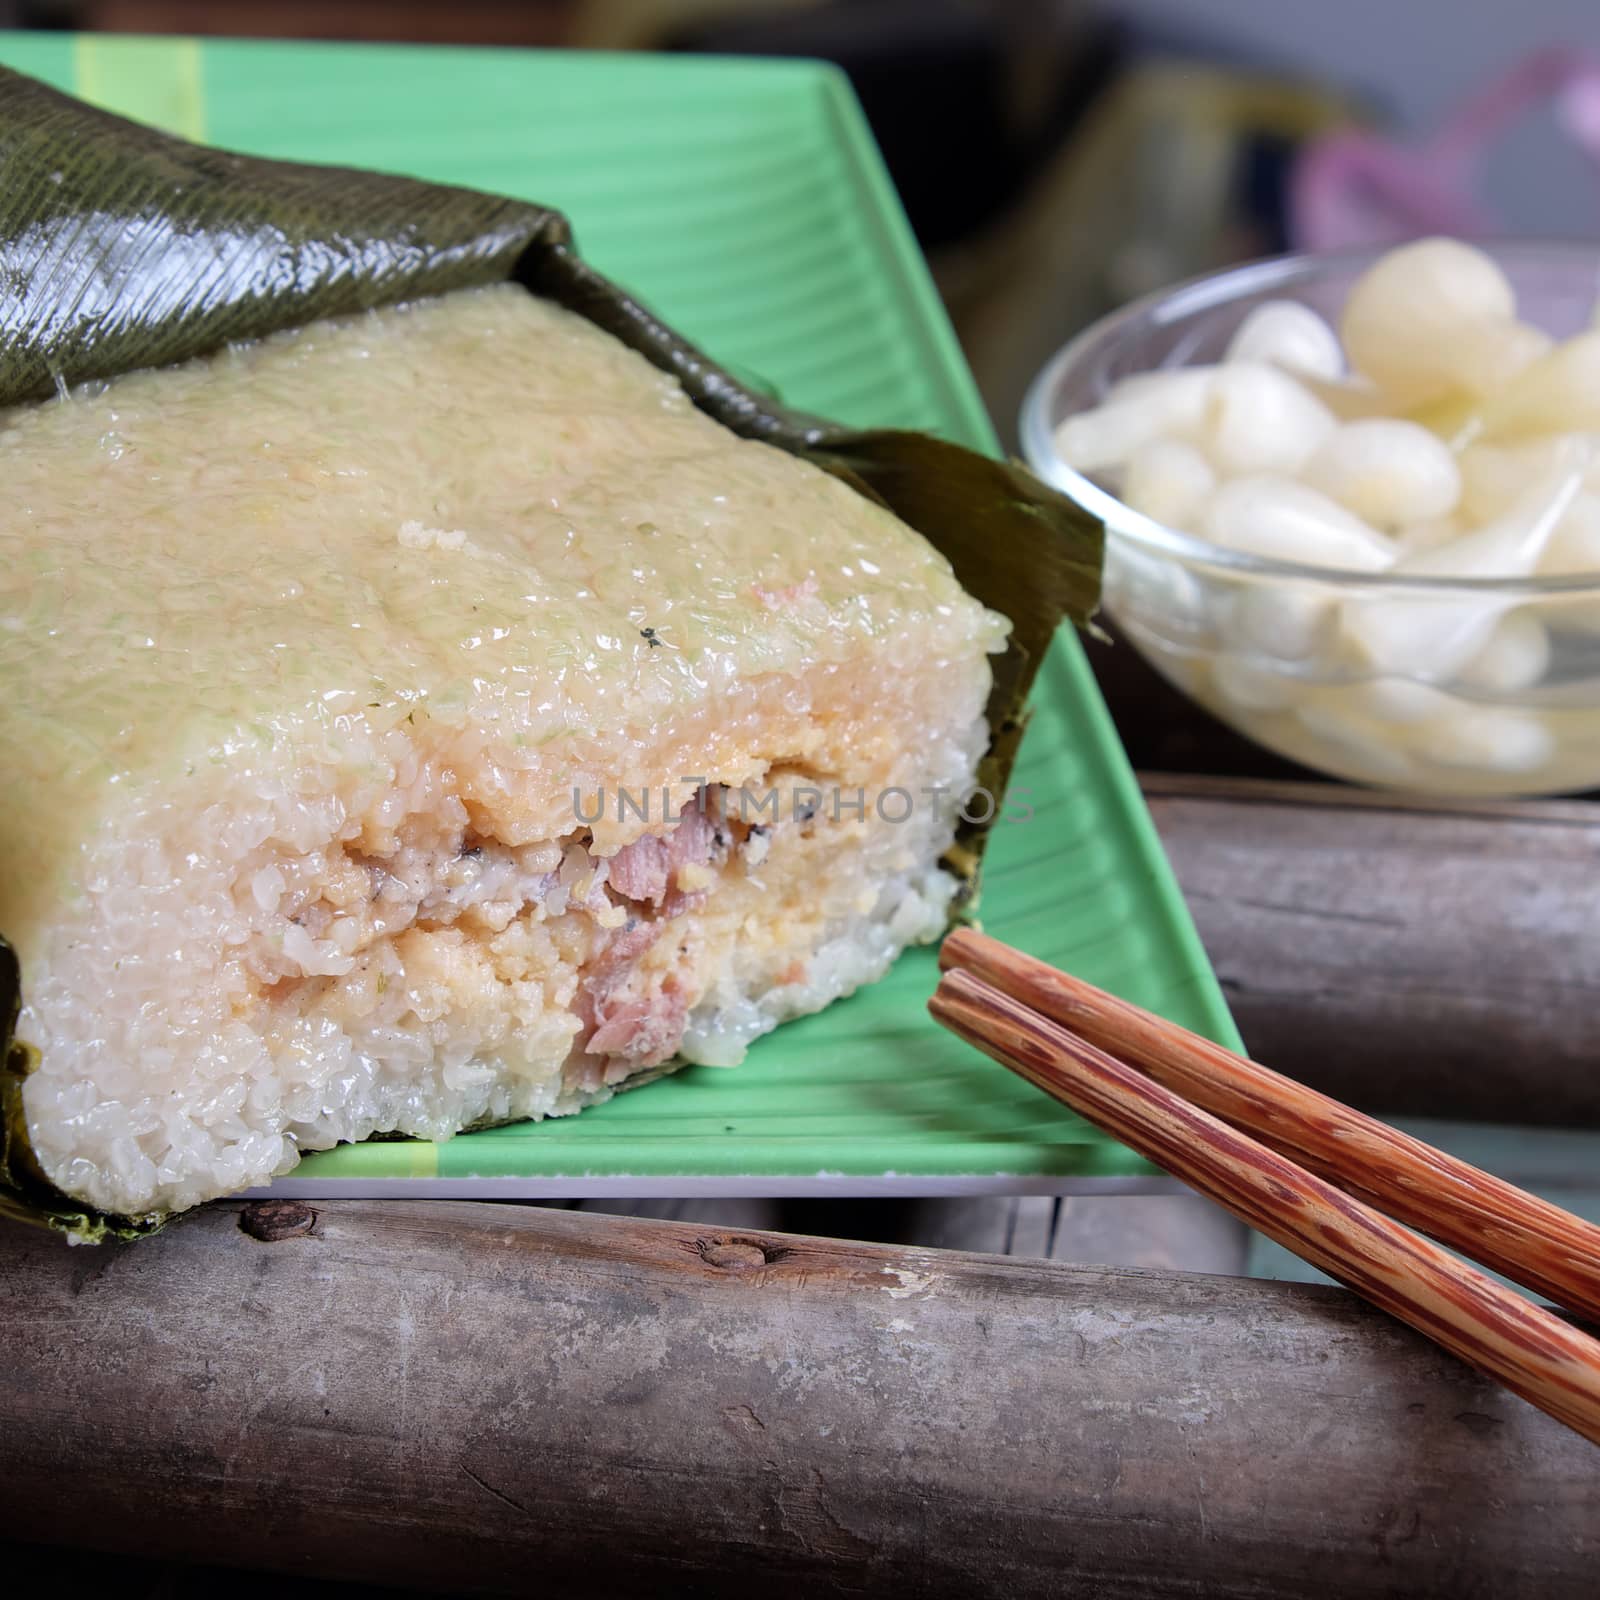 Vietnamese food,Tet, banh chung, traditional food by xuanhuongho